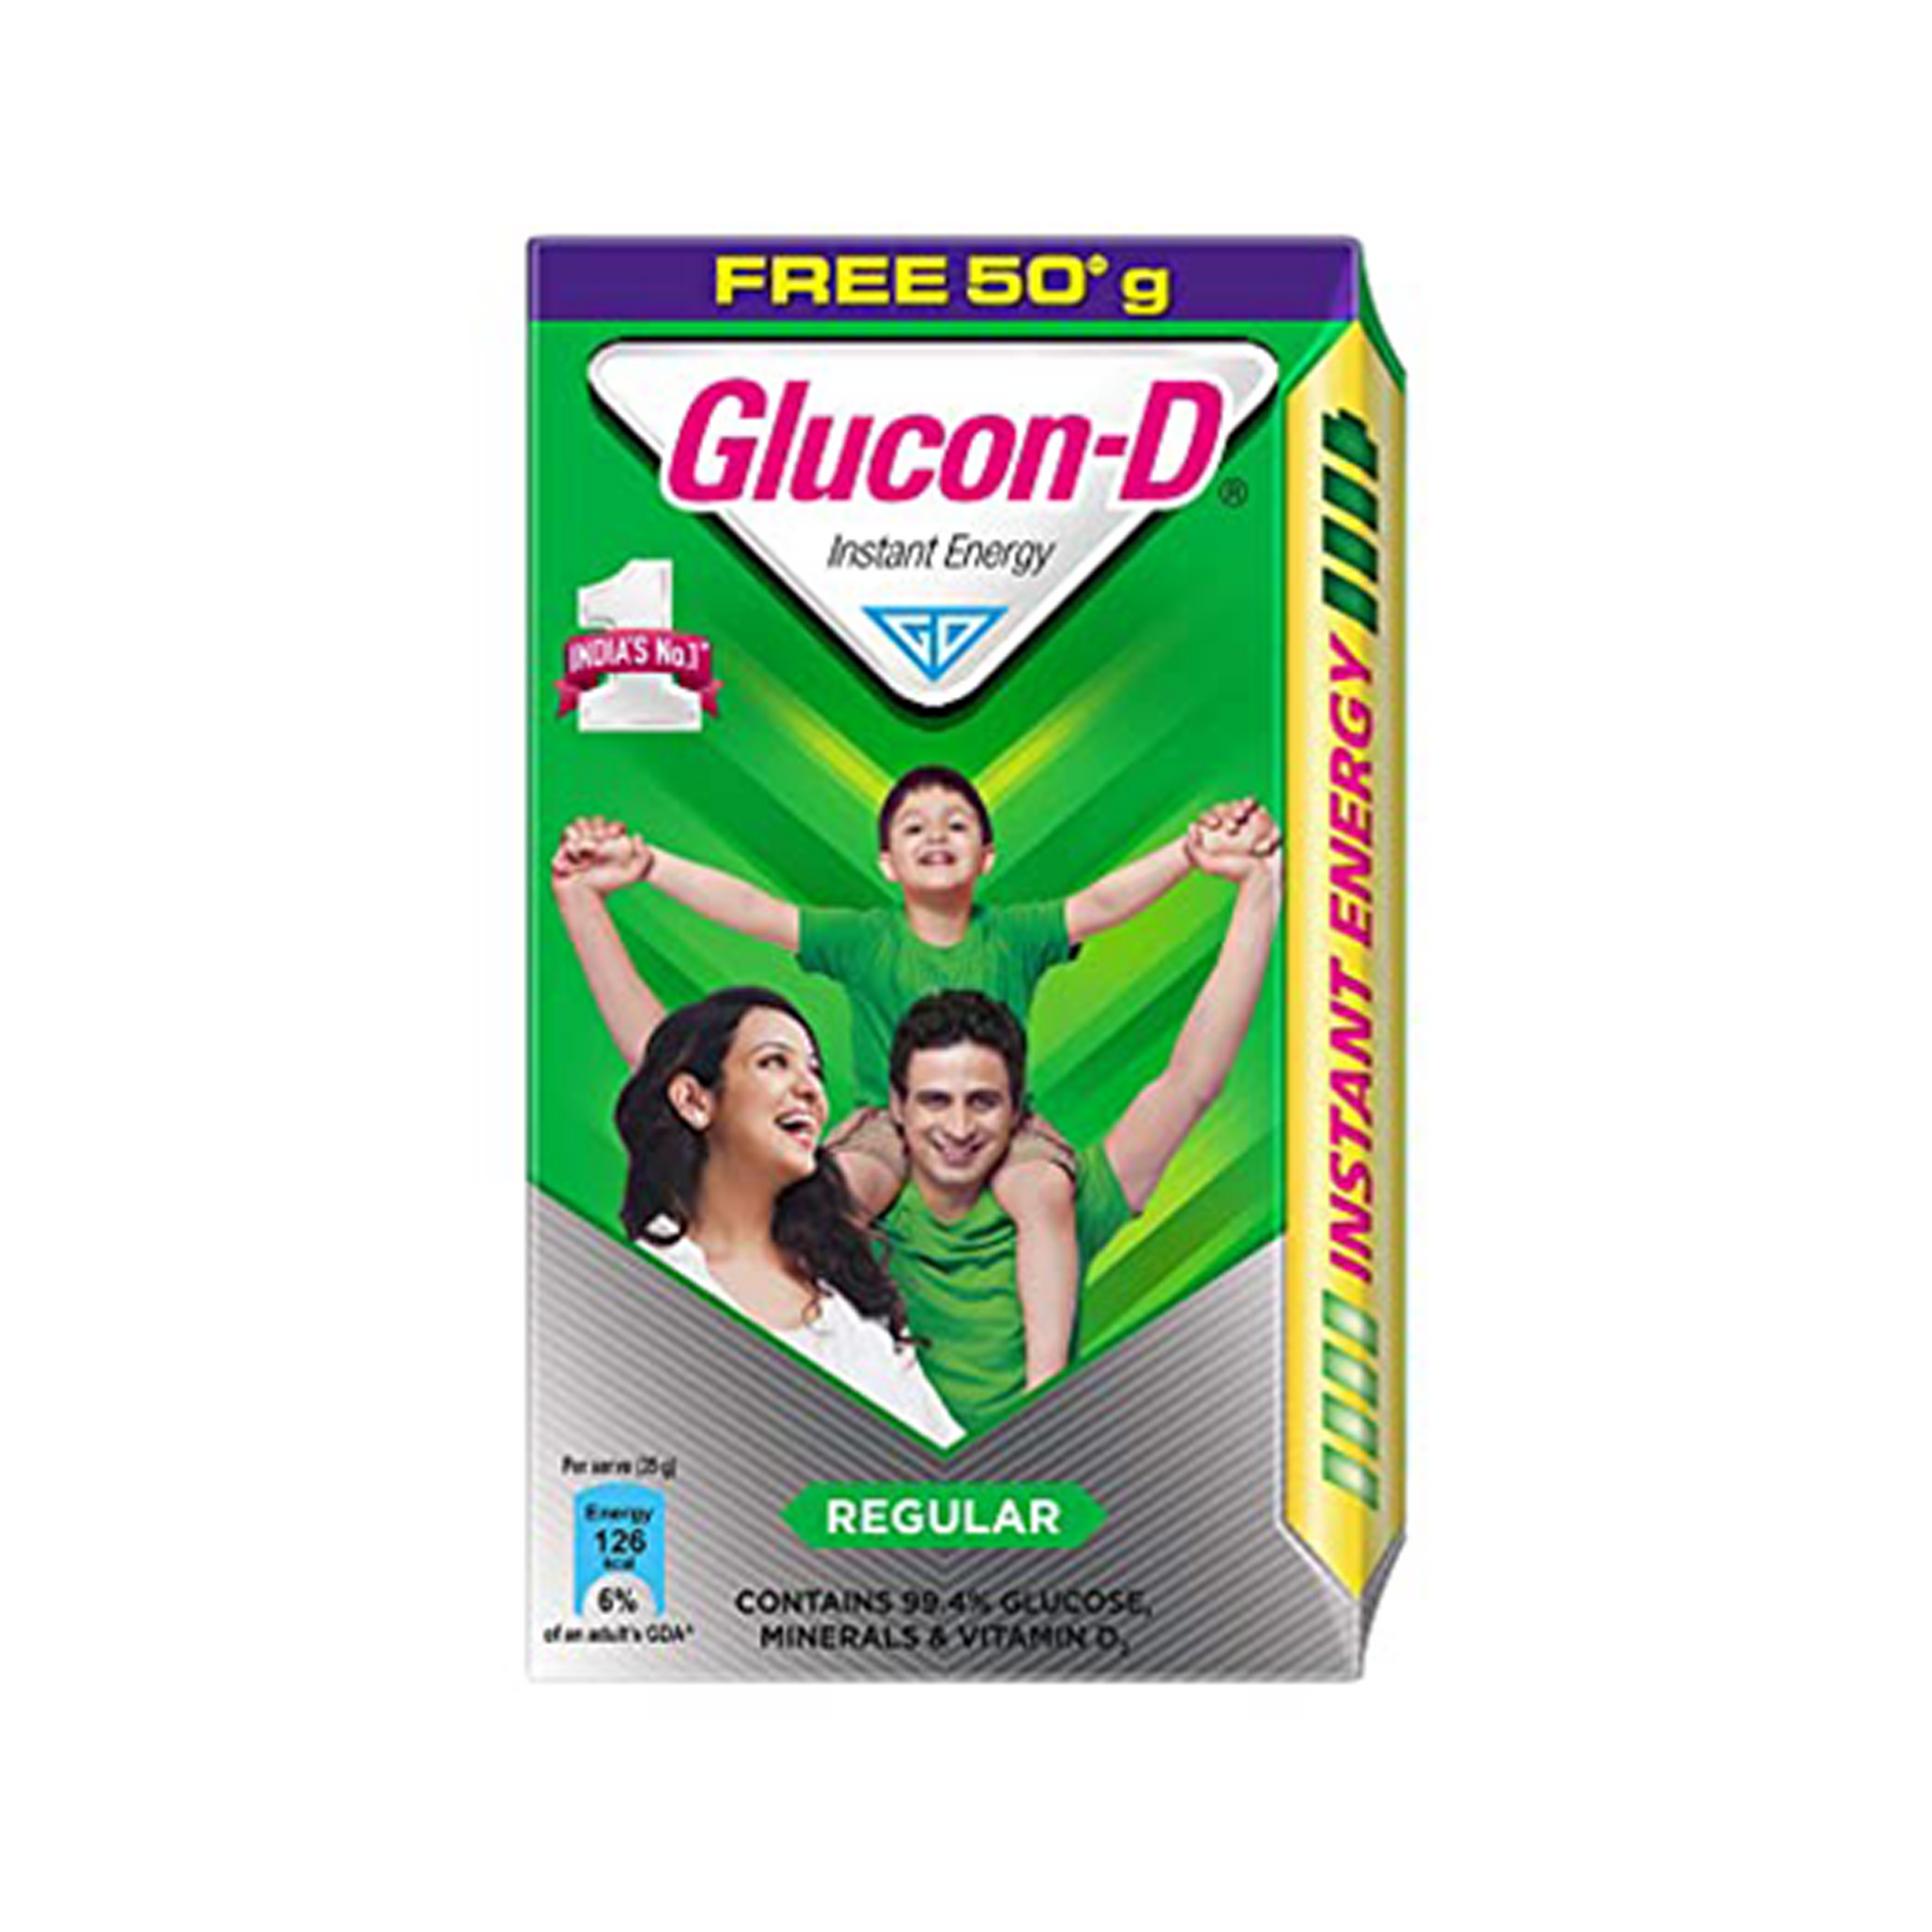 Glucon D Instant Energy Health Drink - Regular.